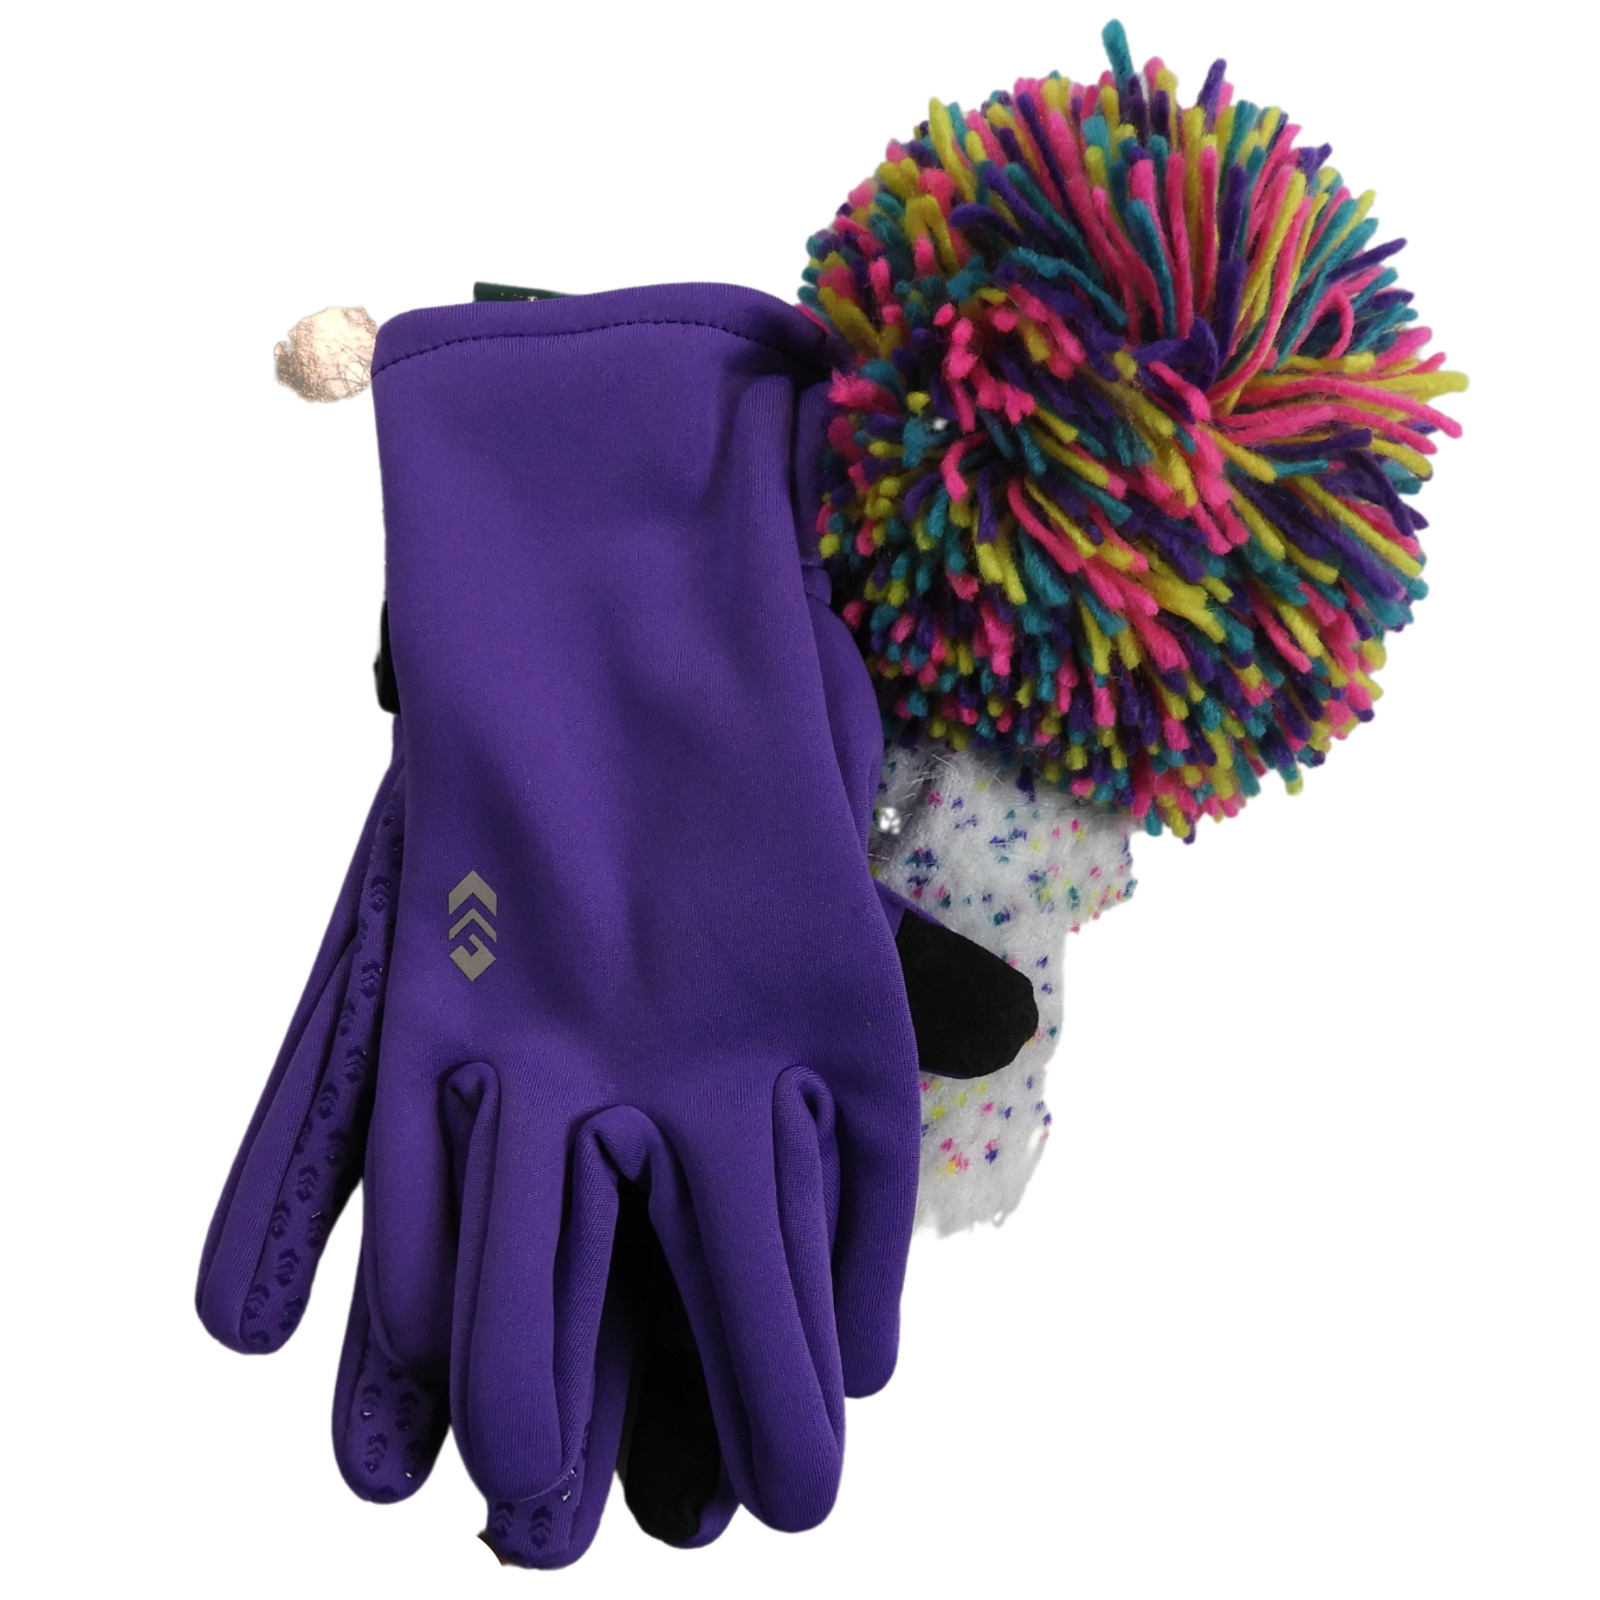 Nwt Free Country Purple Winter Hat & Non-slip Grip Glove Set Girls Size L/xl